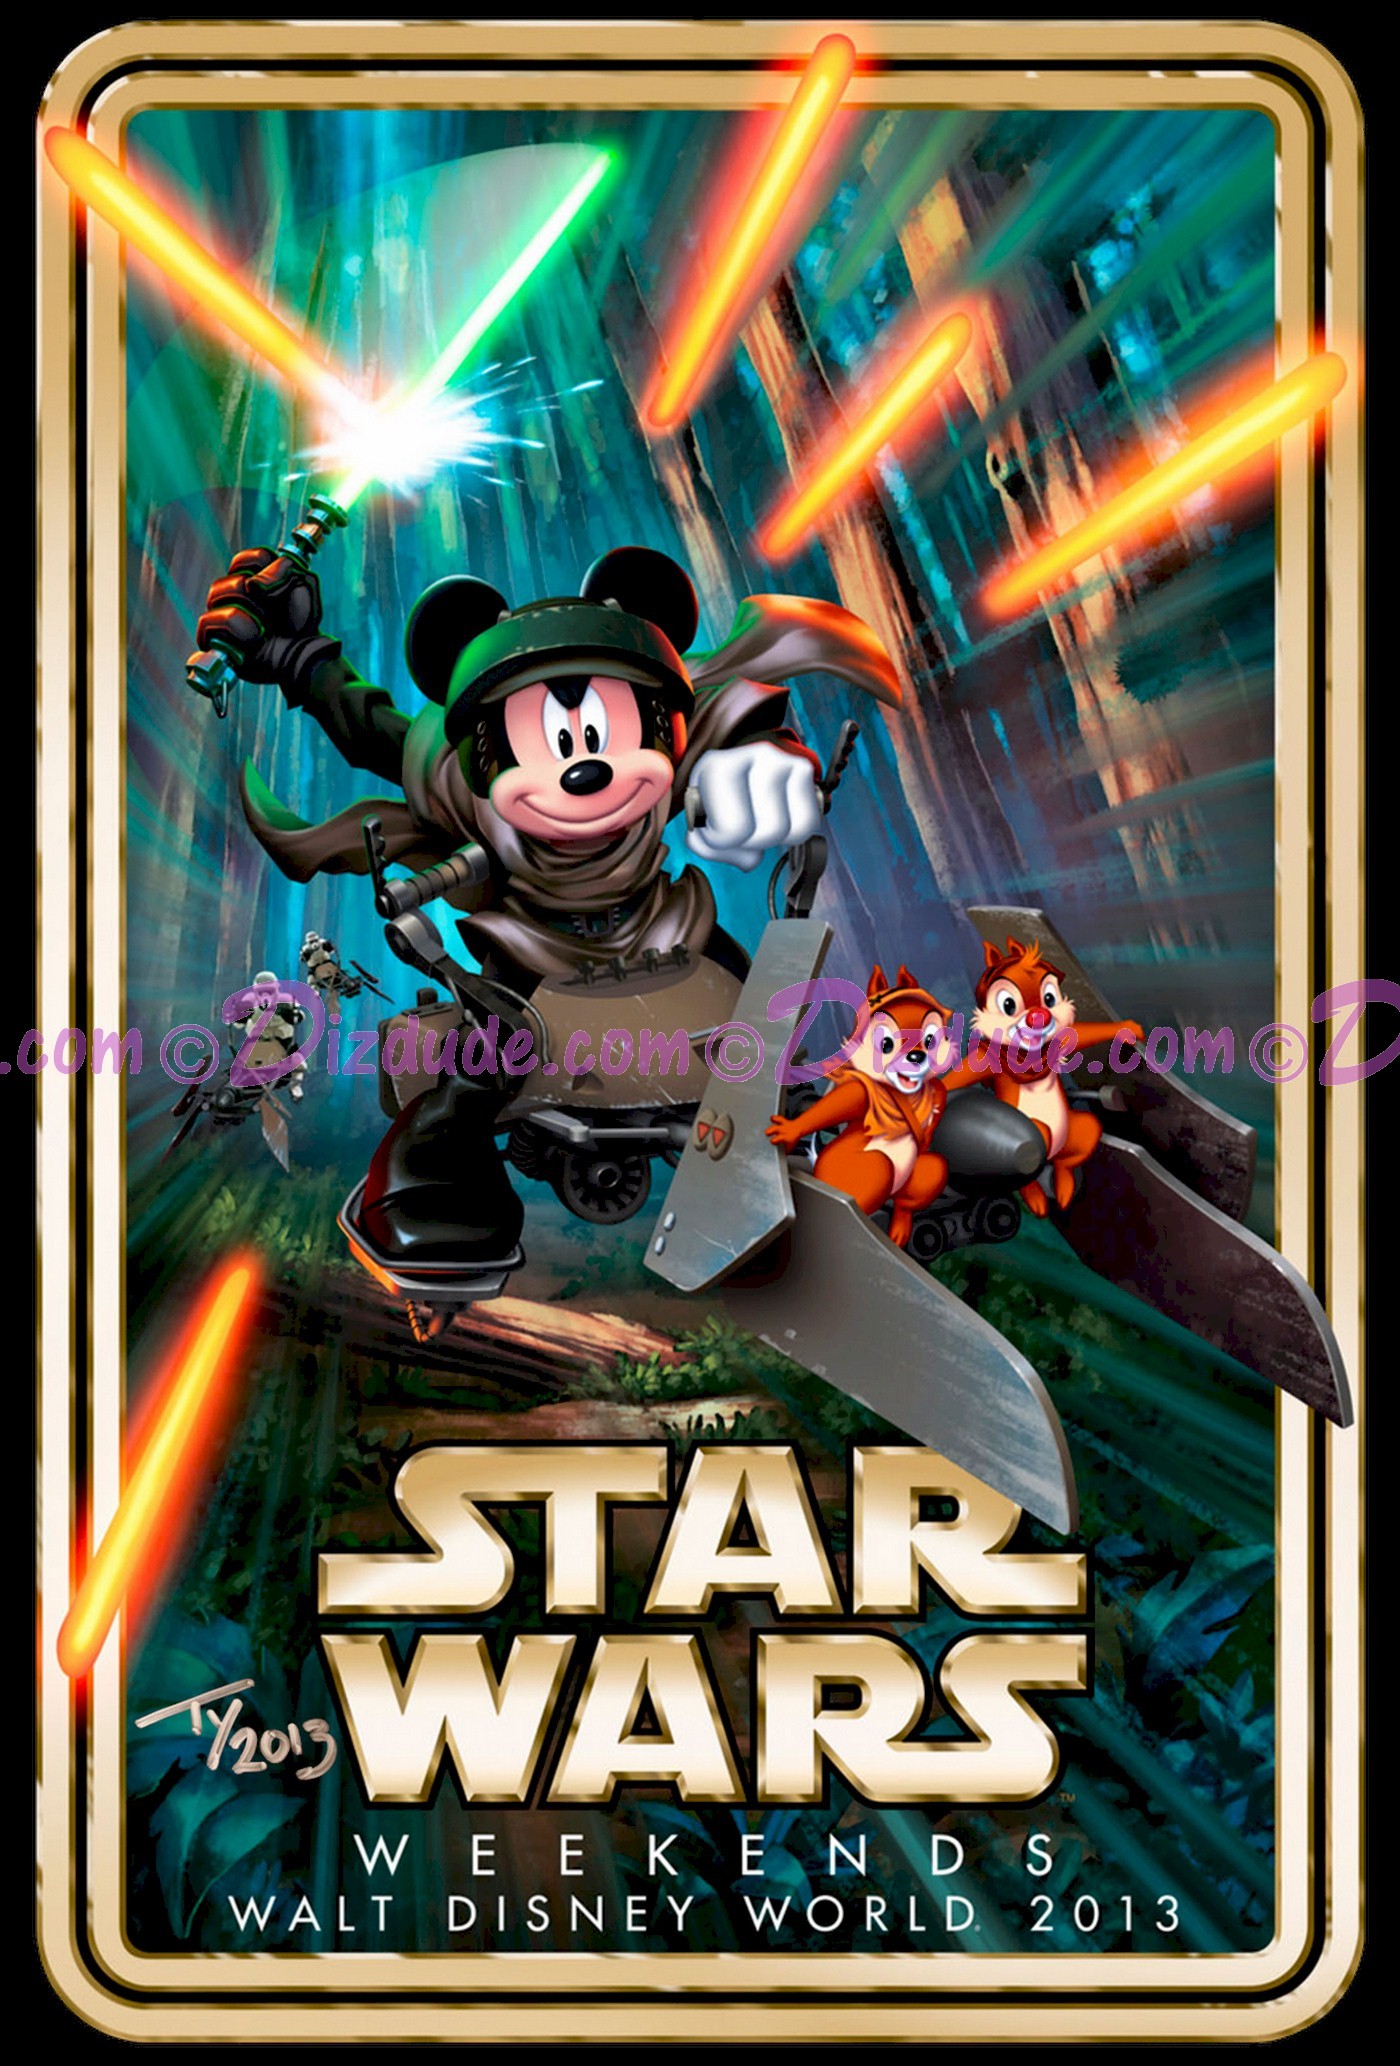 Autographed Exclusive Star Wars Weekends 2013 Event Logo Poster by Disney Artists Tyler Dumas © Dizdude.com